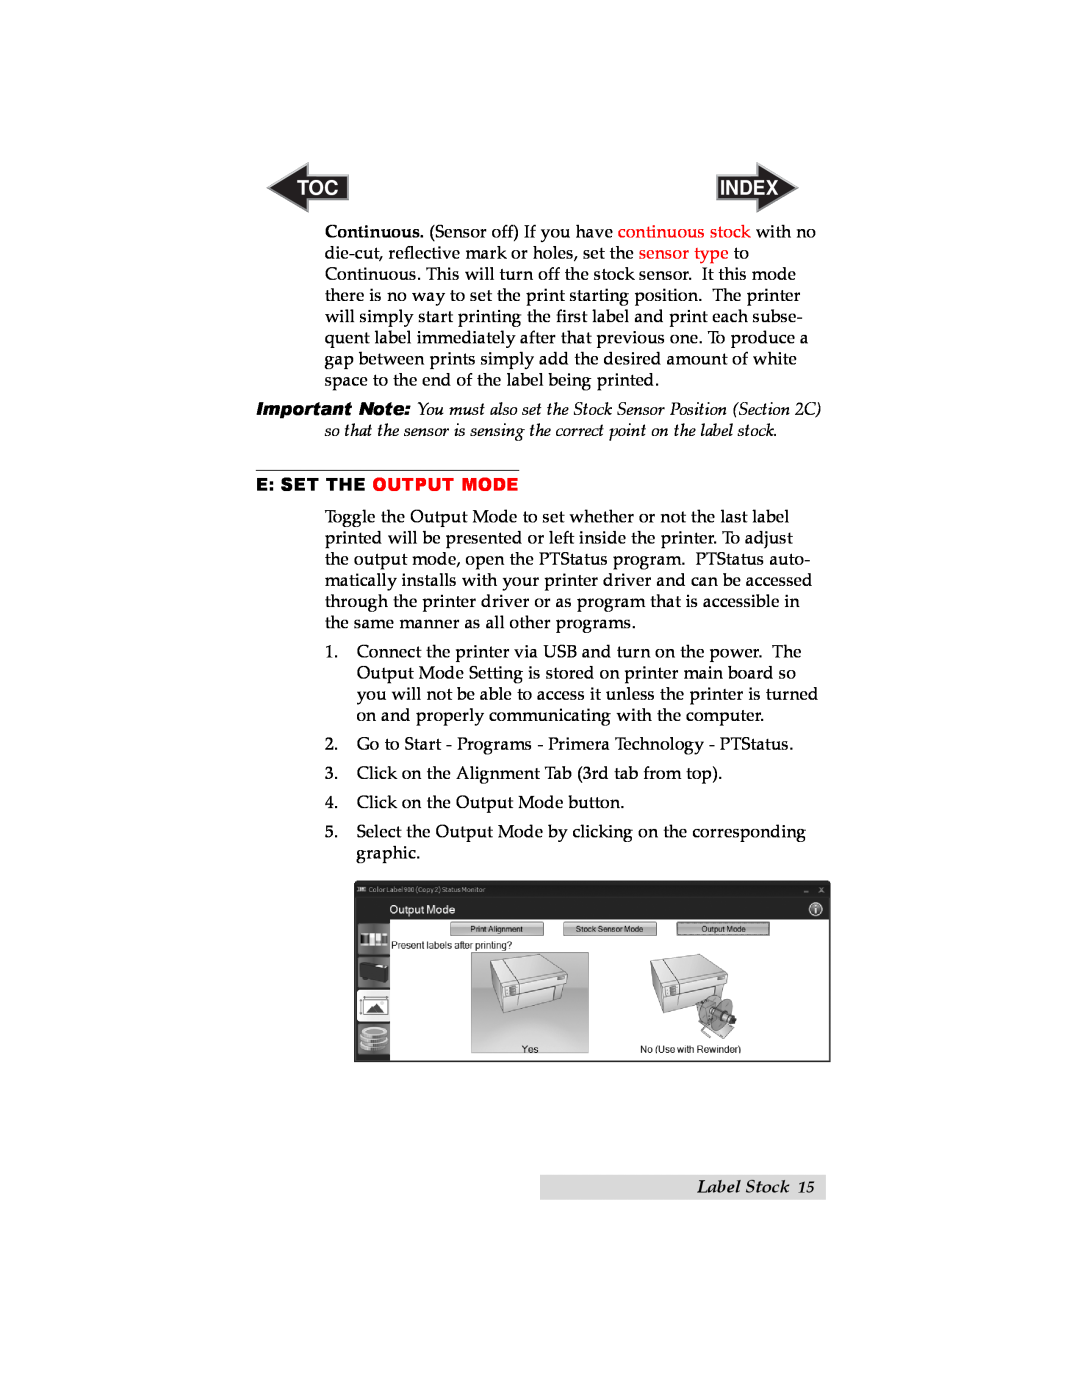 Primera Technology RX900 user manual E Set The Output Mode, Index, Label Stock 